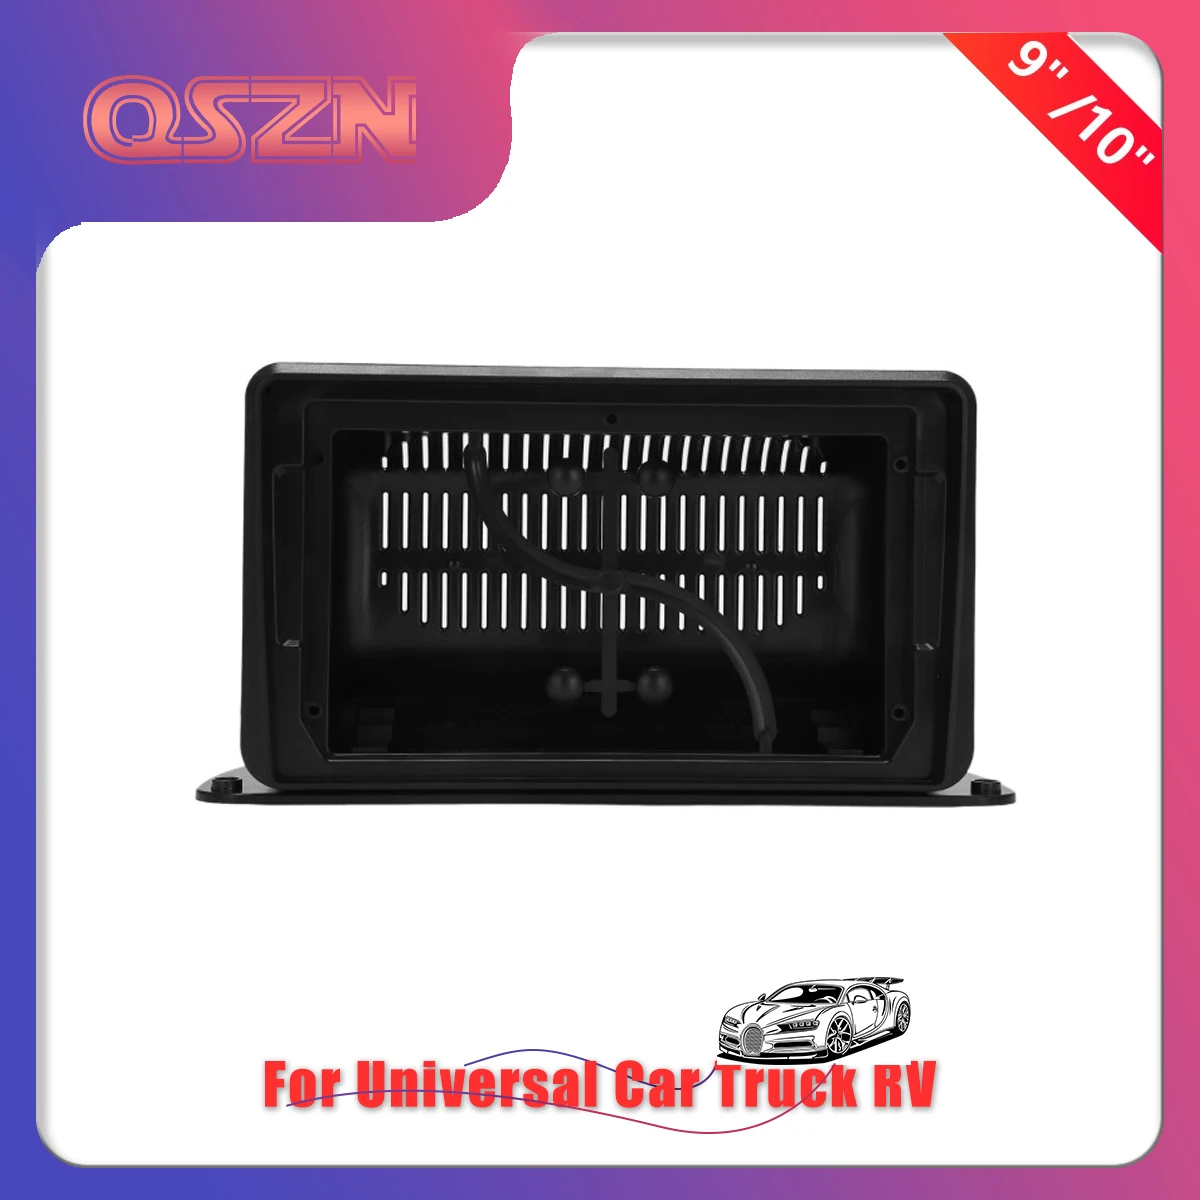 

QSZN 9 " 10" 2 Din Car radio DVD Installation Fascias Panel For Car Truck Motorhome RV Audio Dash Fit Panel Dash Trim Kit Frame